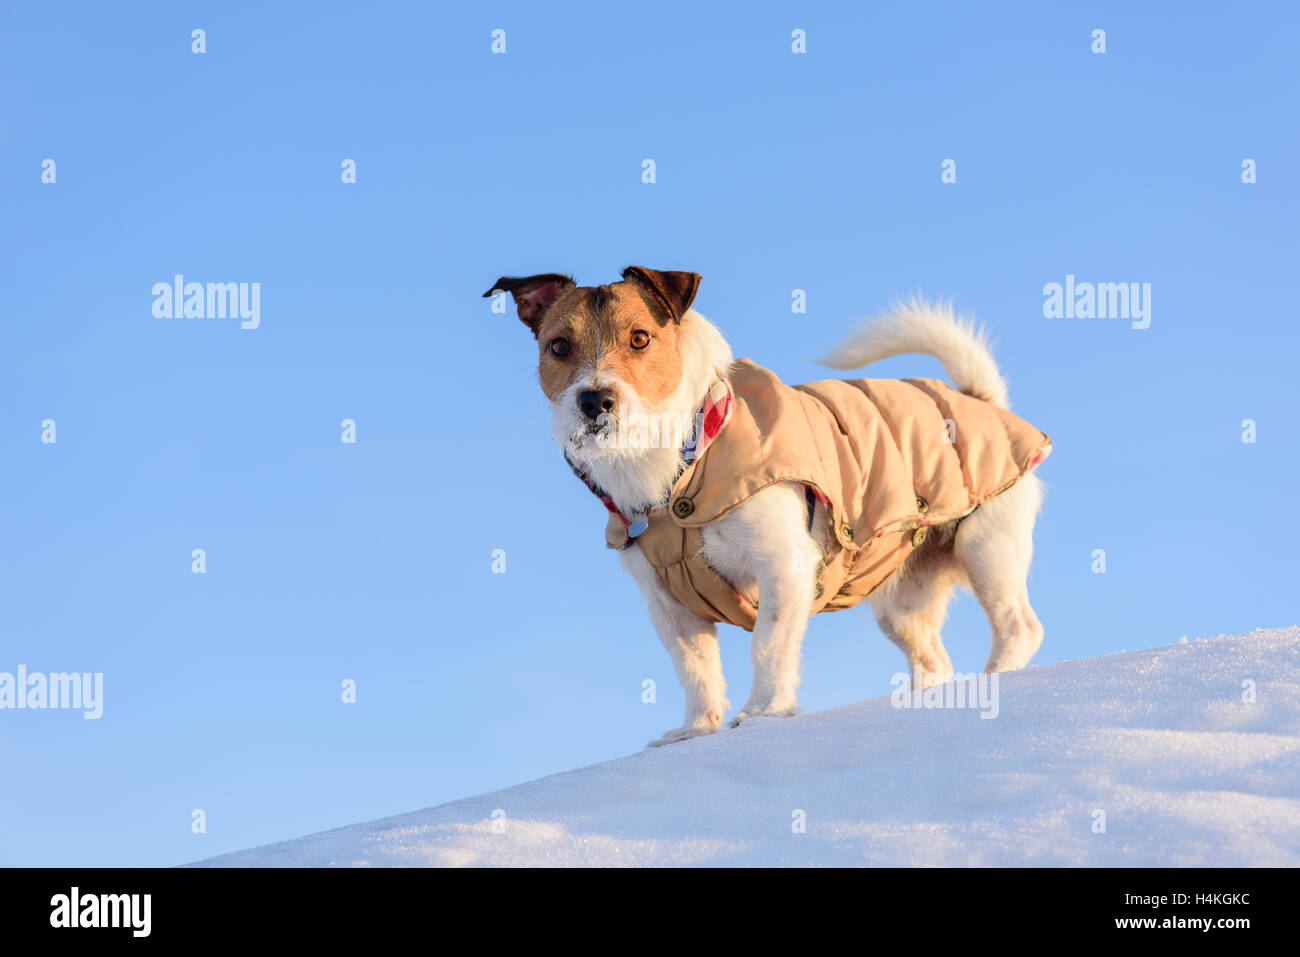 Dog hiking at winter mountains Stock Photo